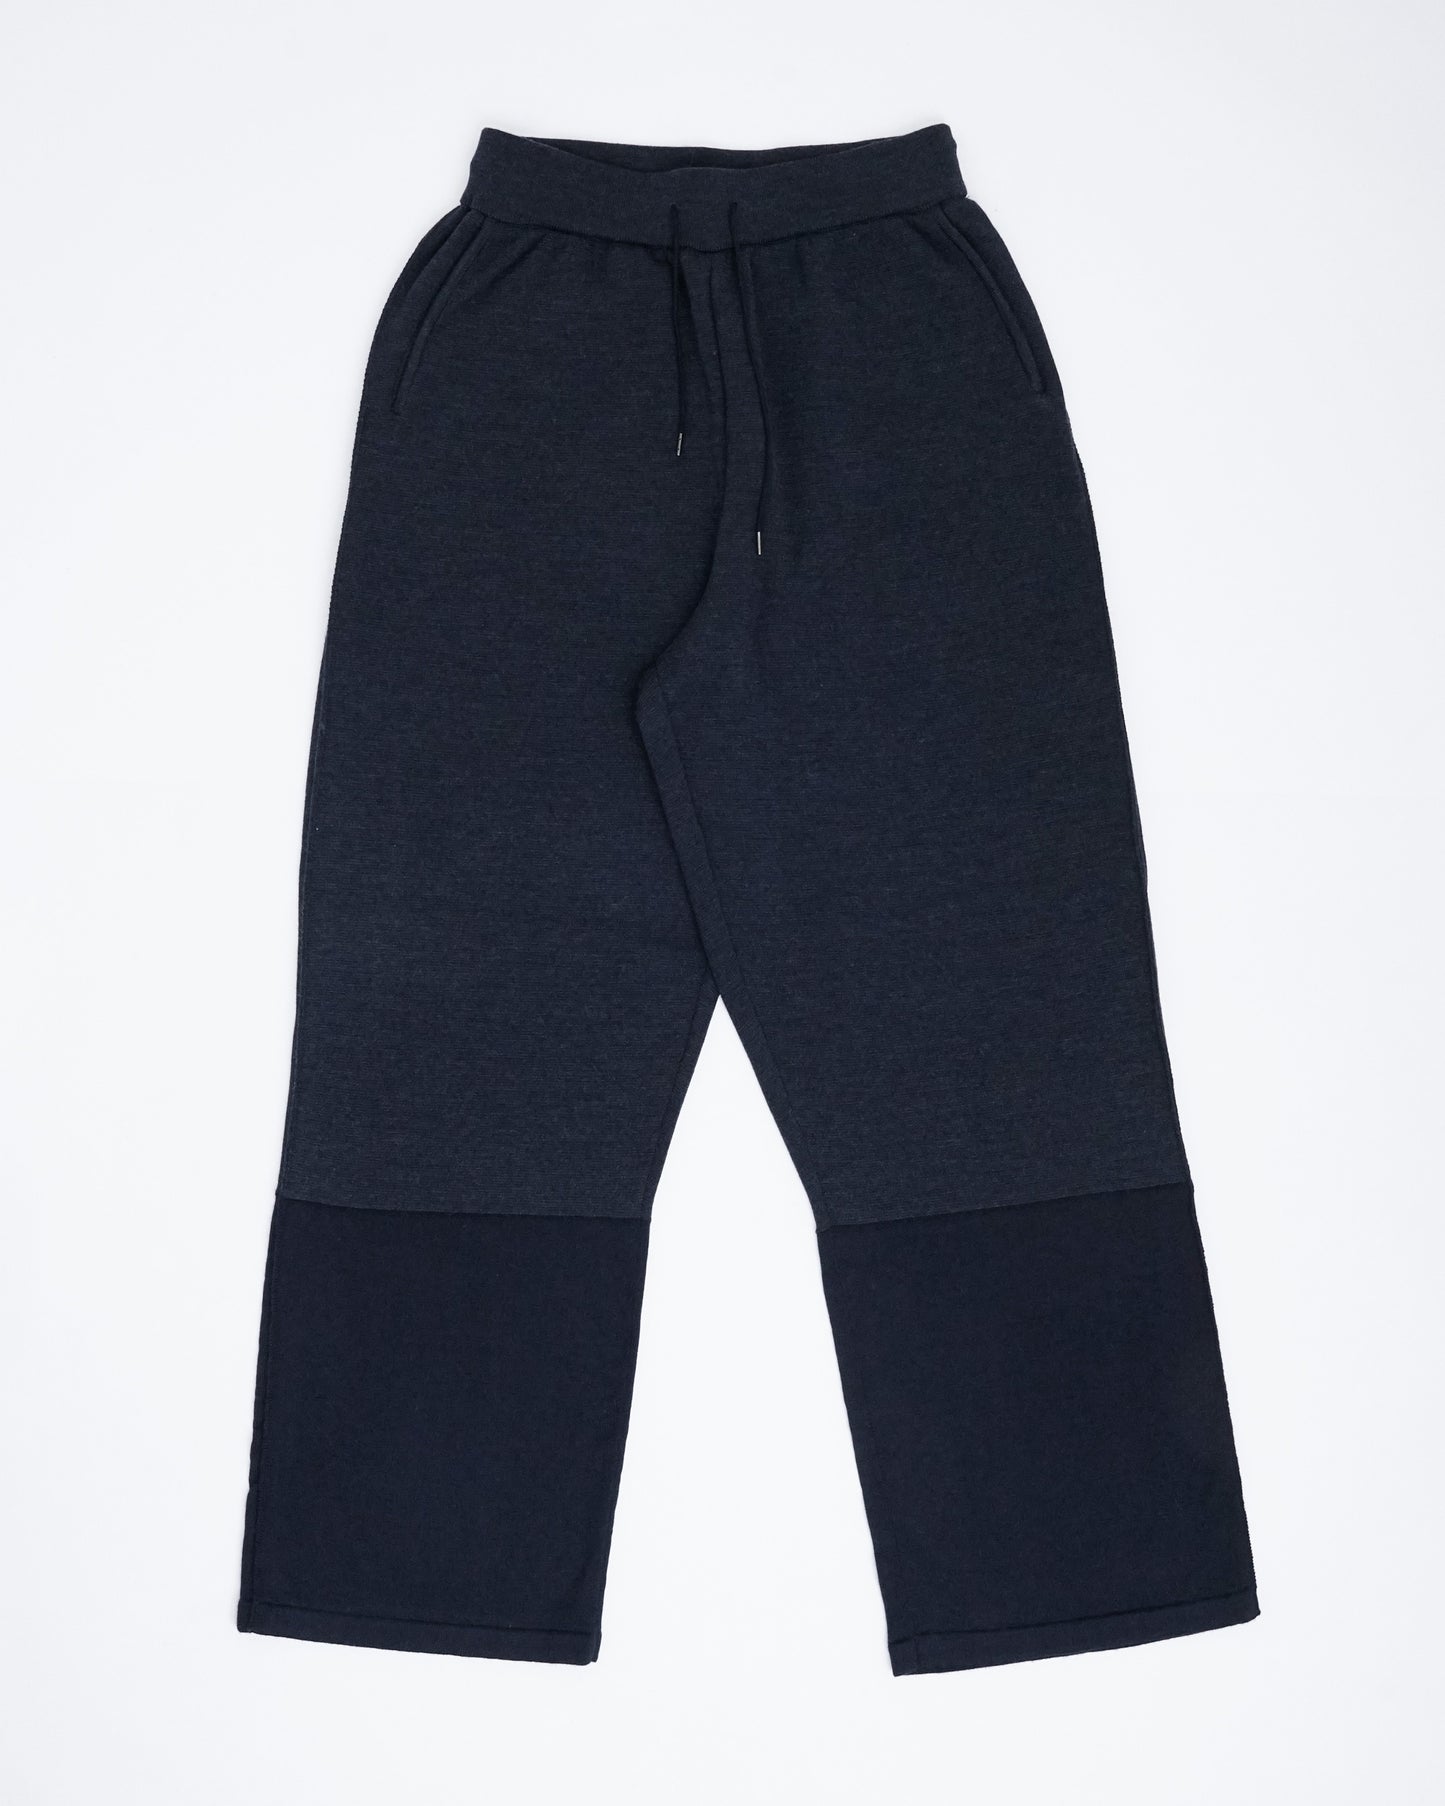 Bicolour Knit Pants(Navy×Navy)